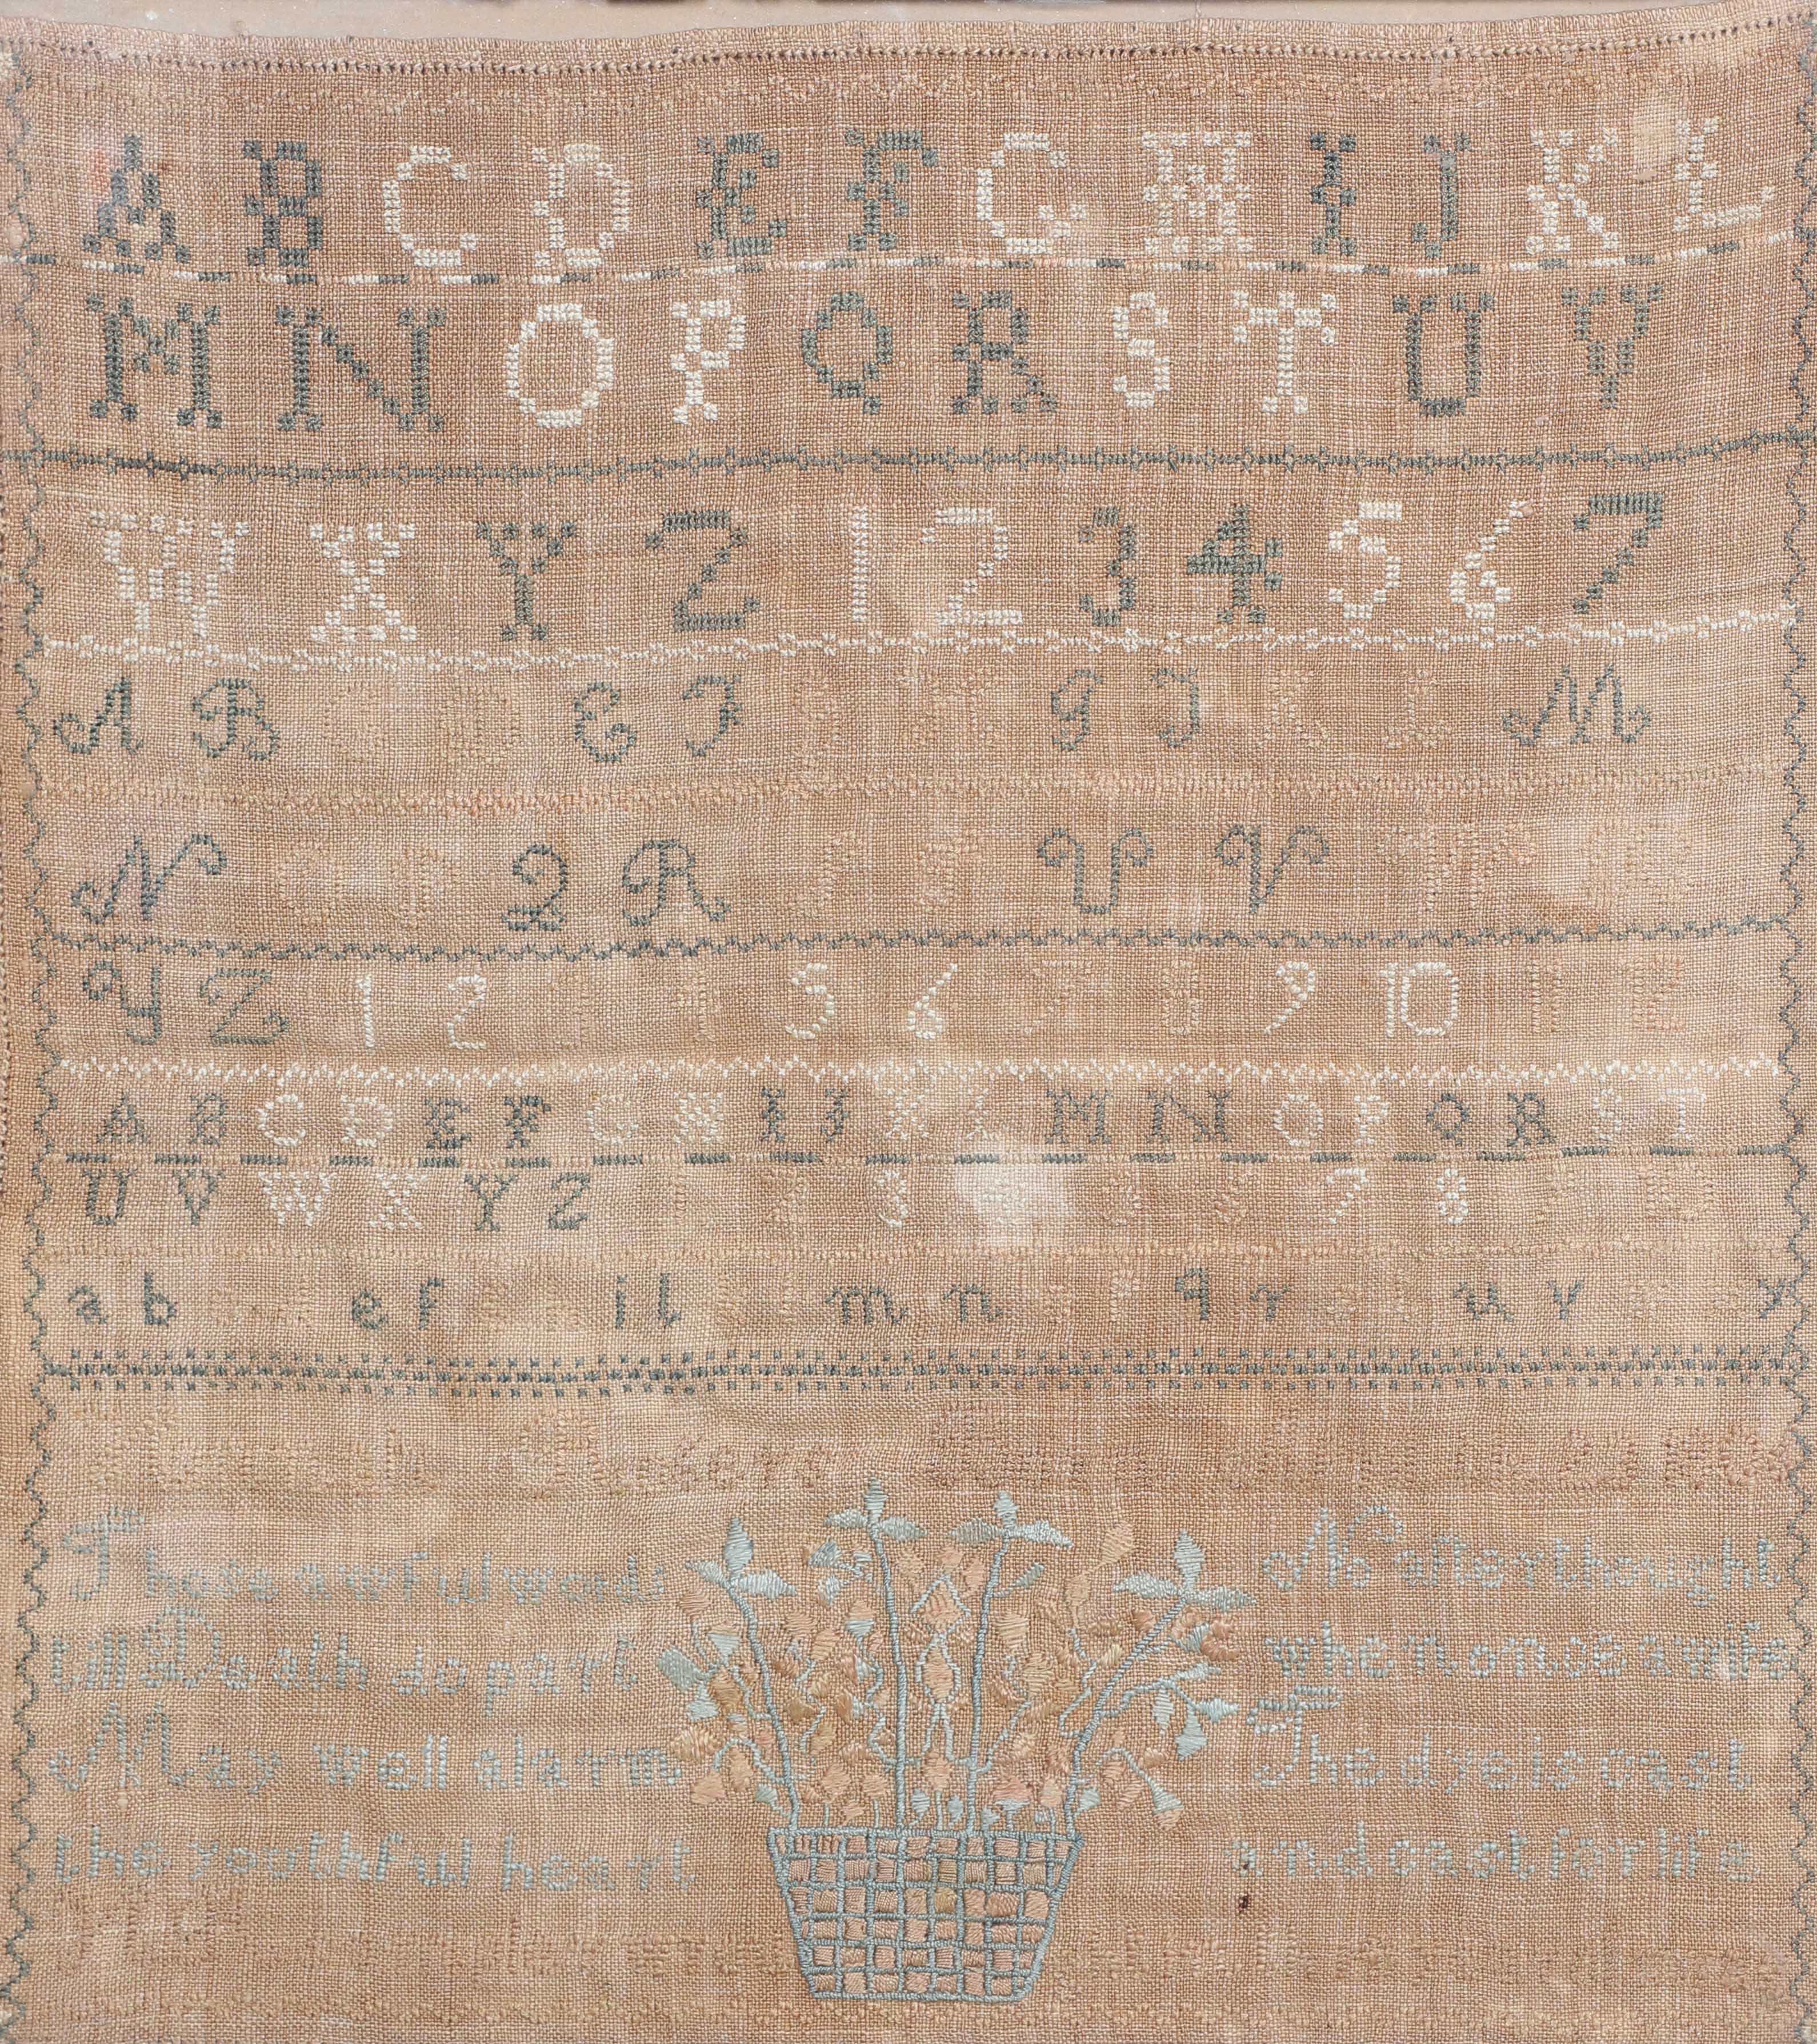 Early 19th C Alphanumeric Needlework